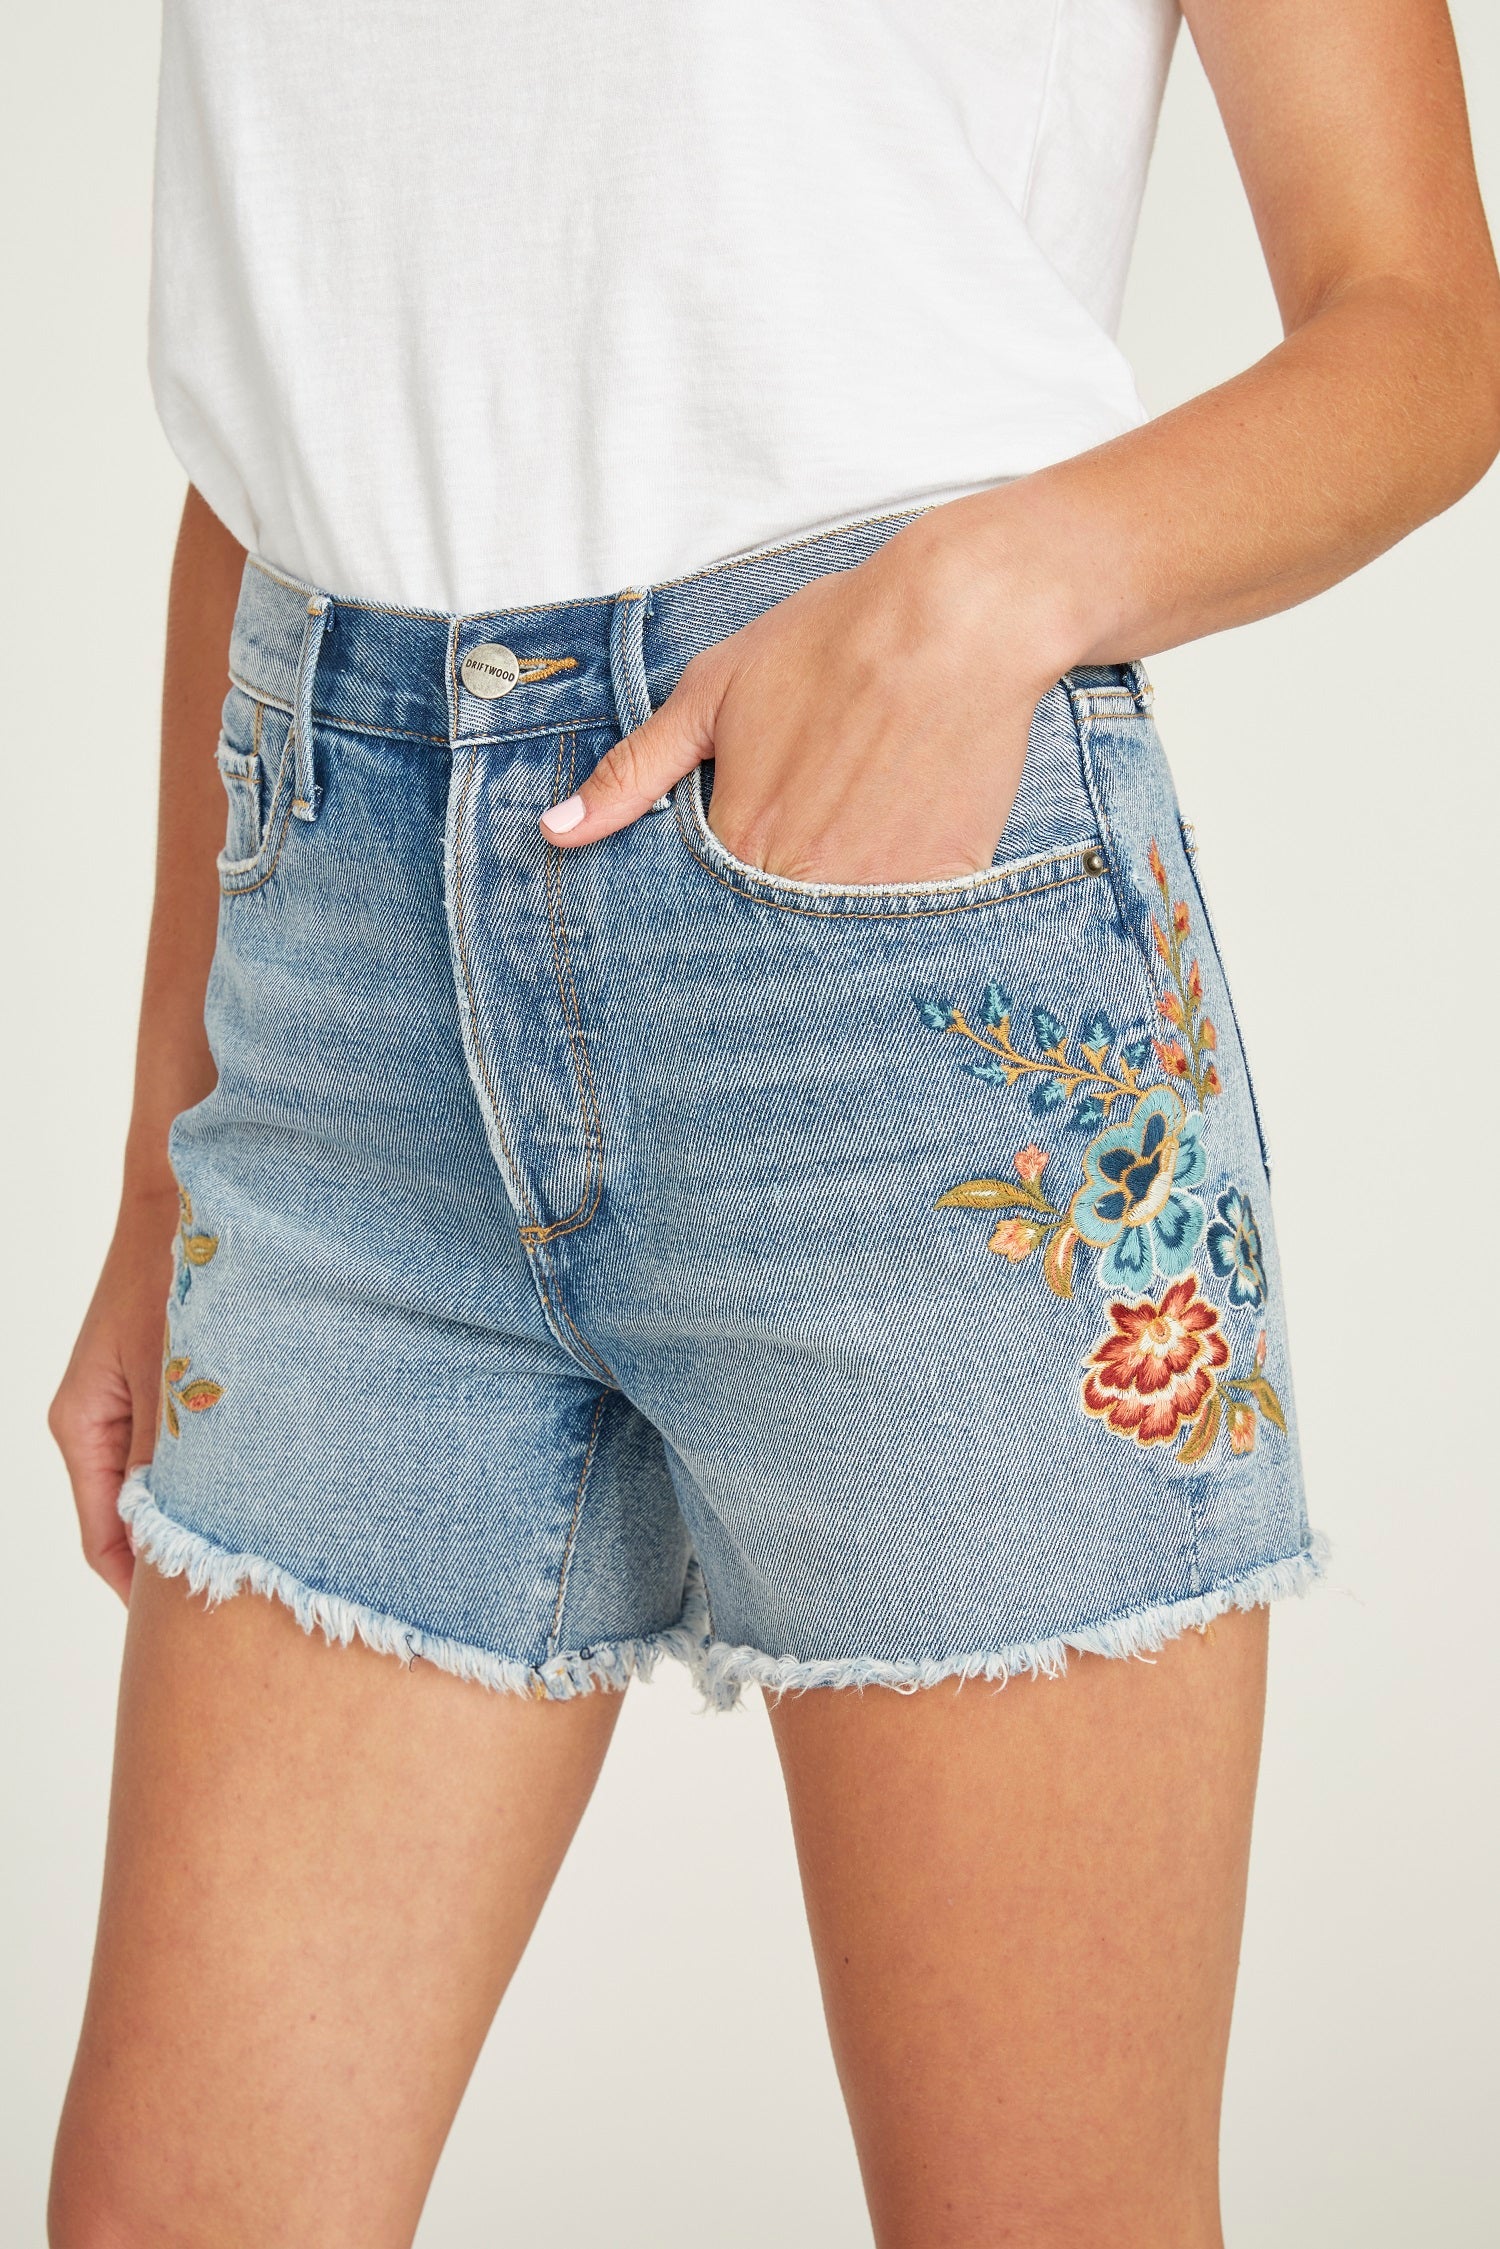 Goldie Short - Maui – Driftwood Jeans